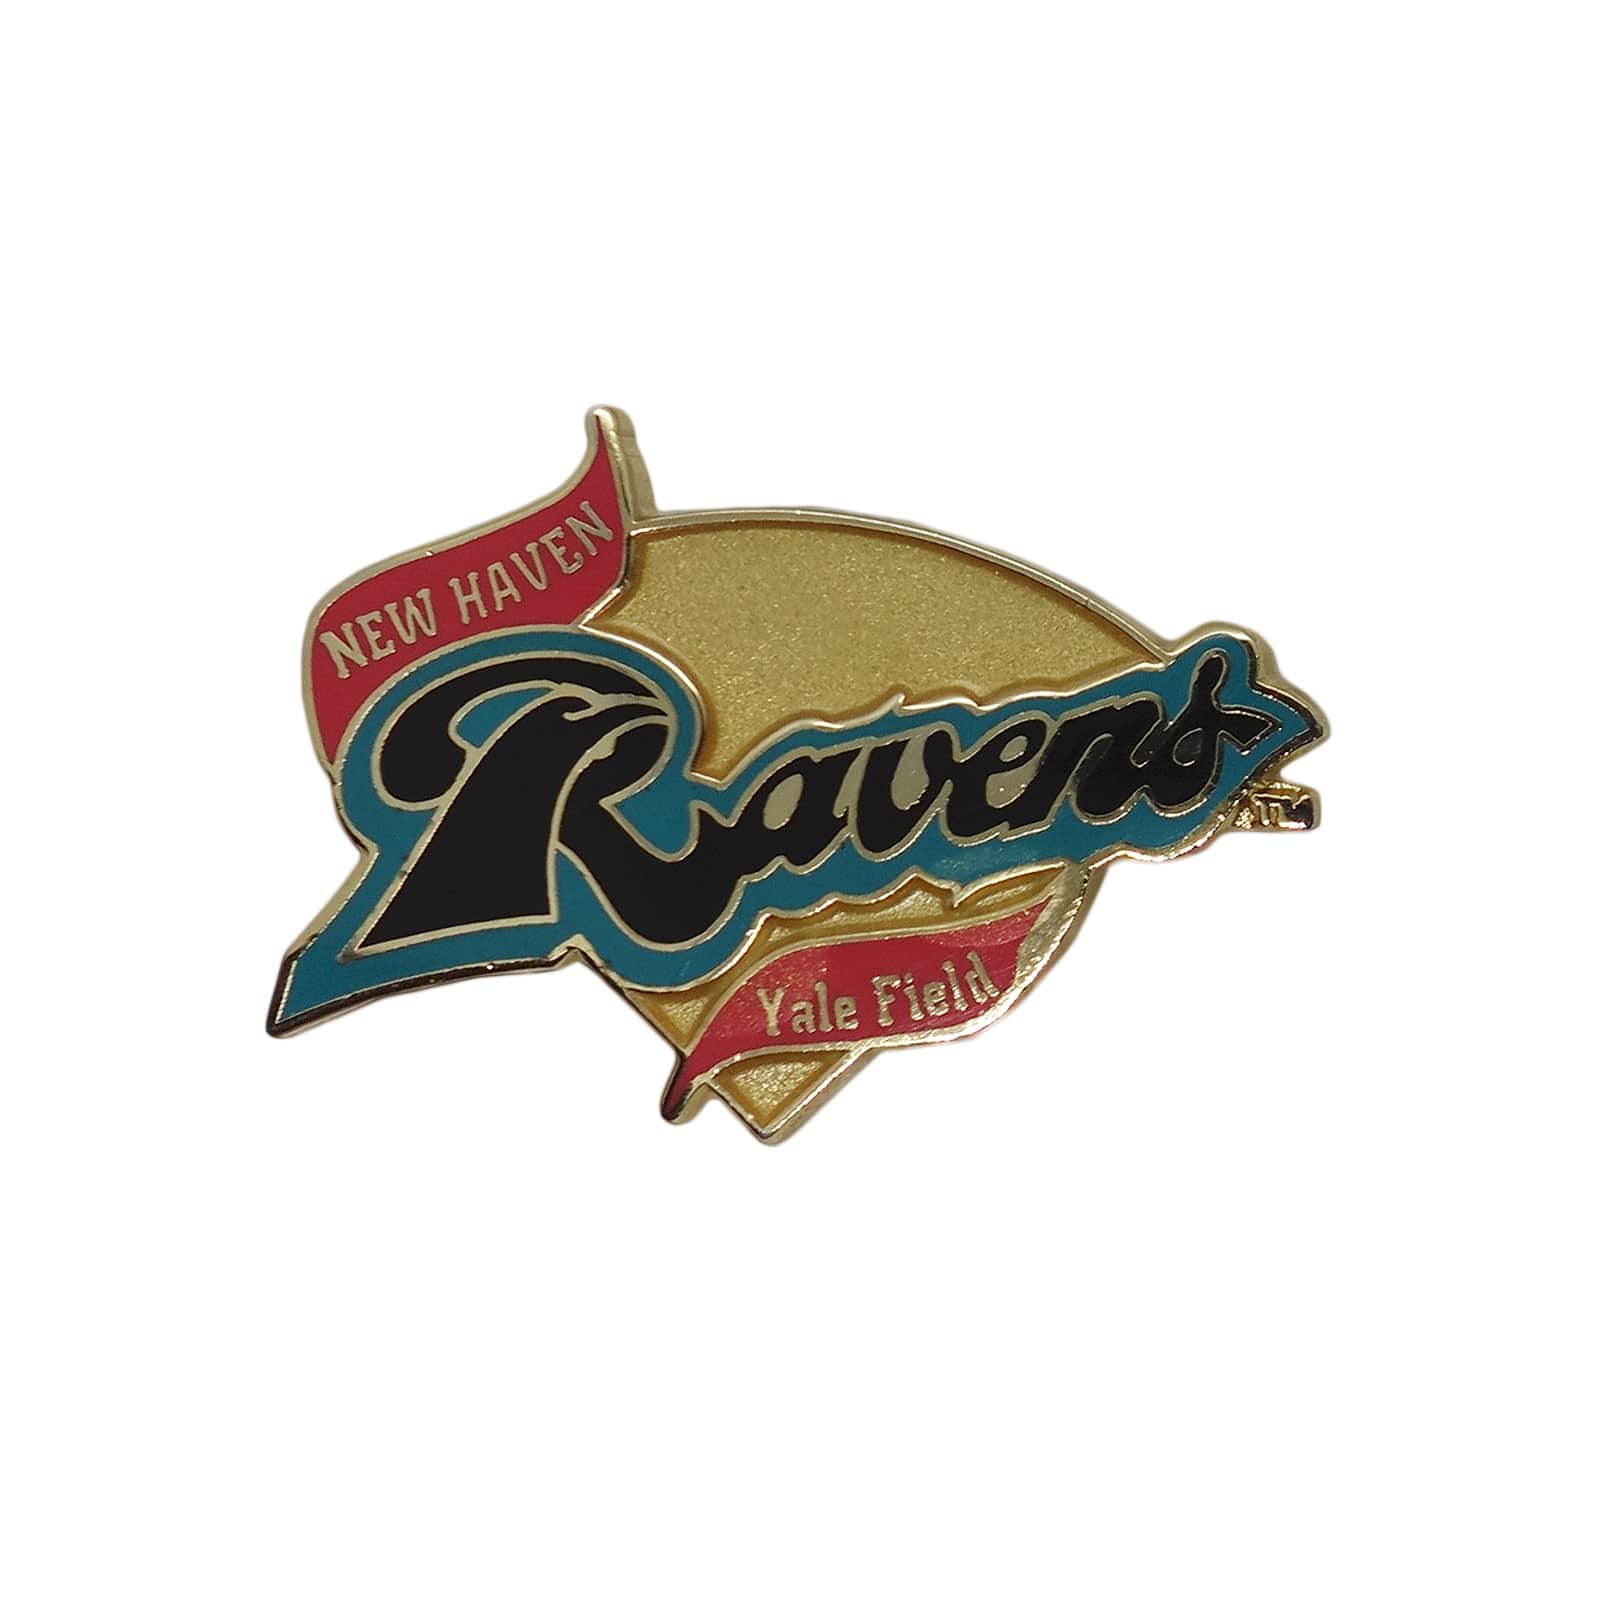 New Haven Ravens ピンズ 野球 ニューヘブン・レイブンズ 留め具付き